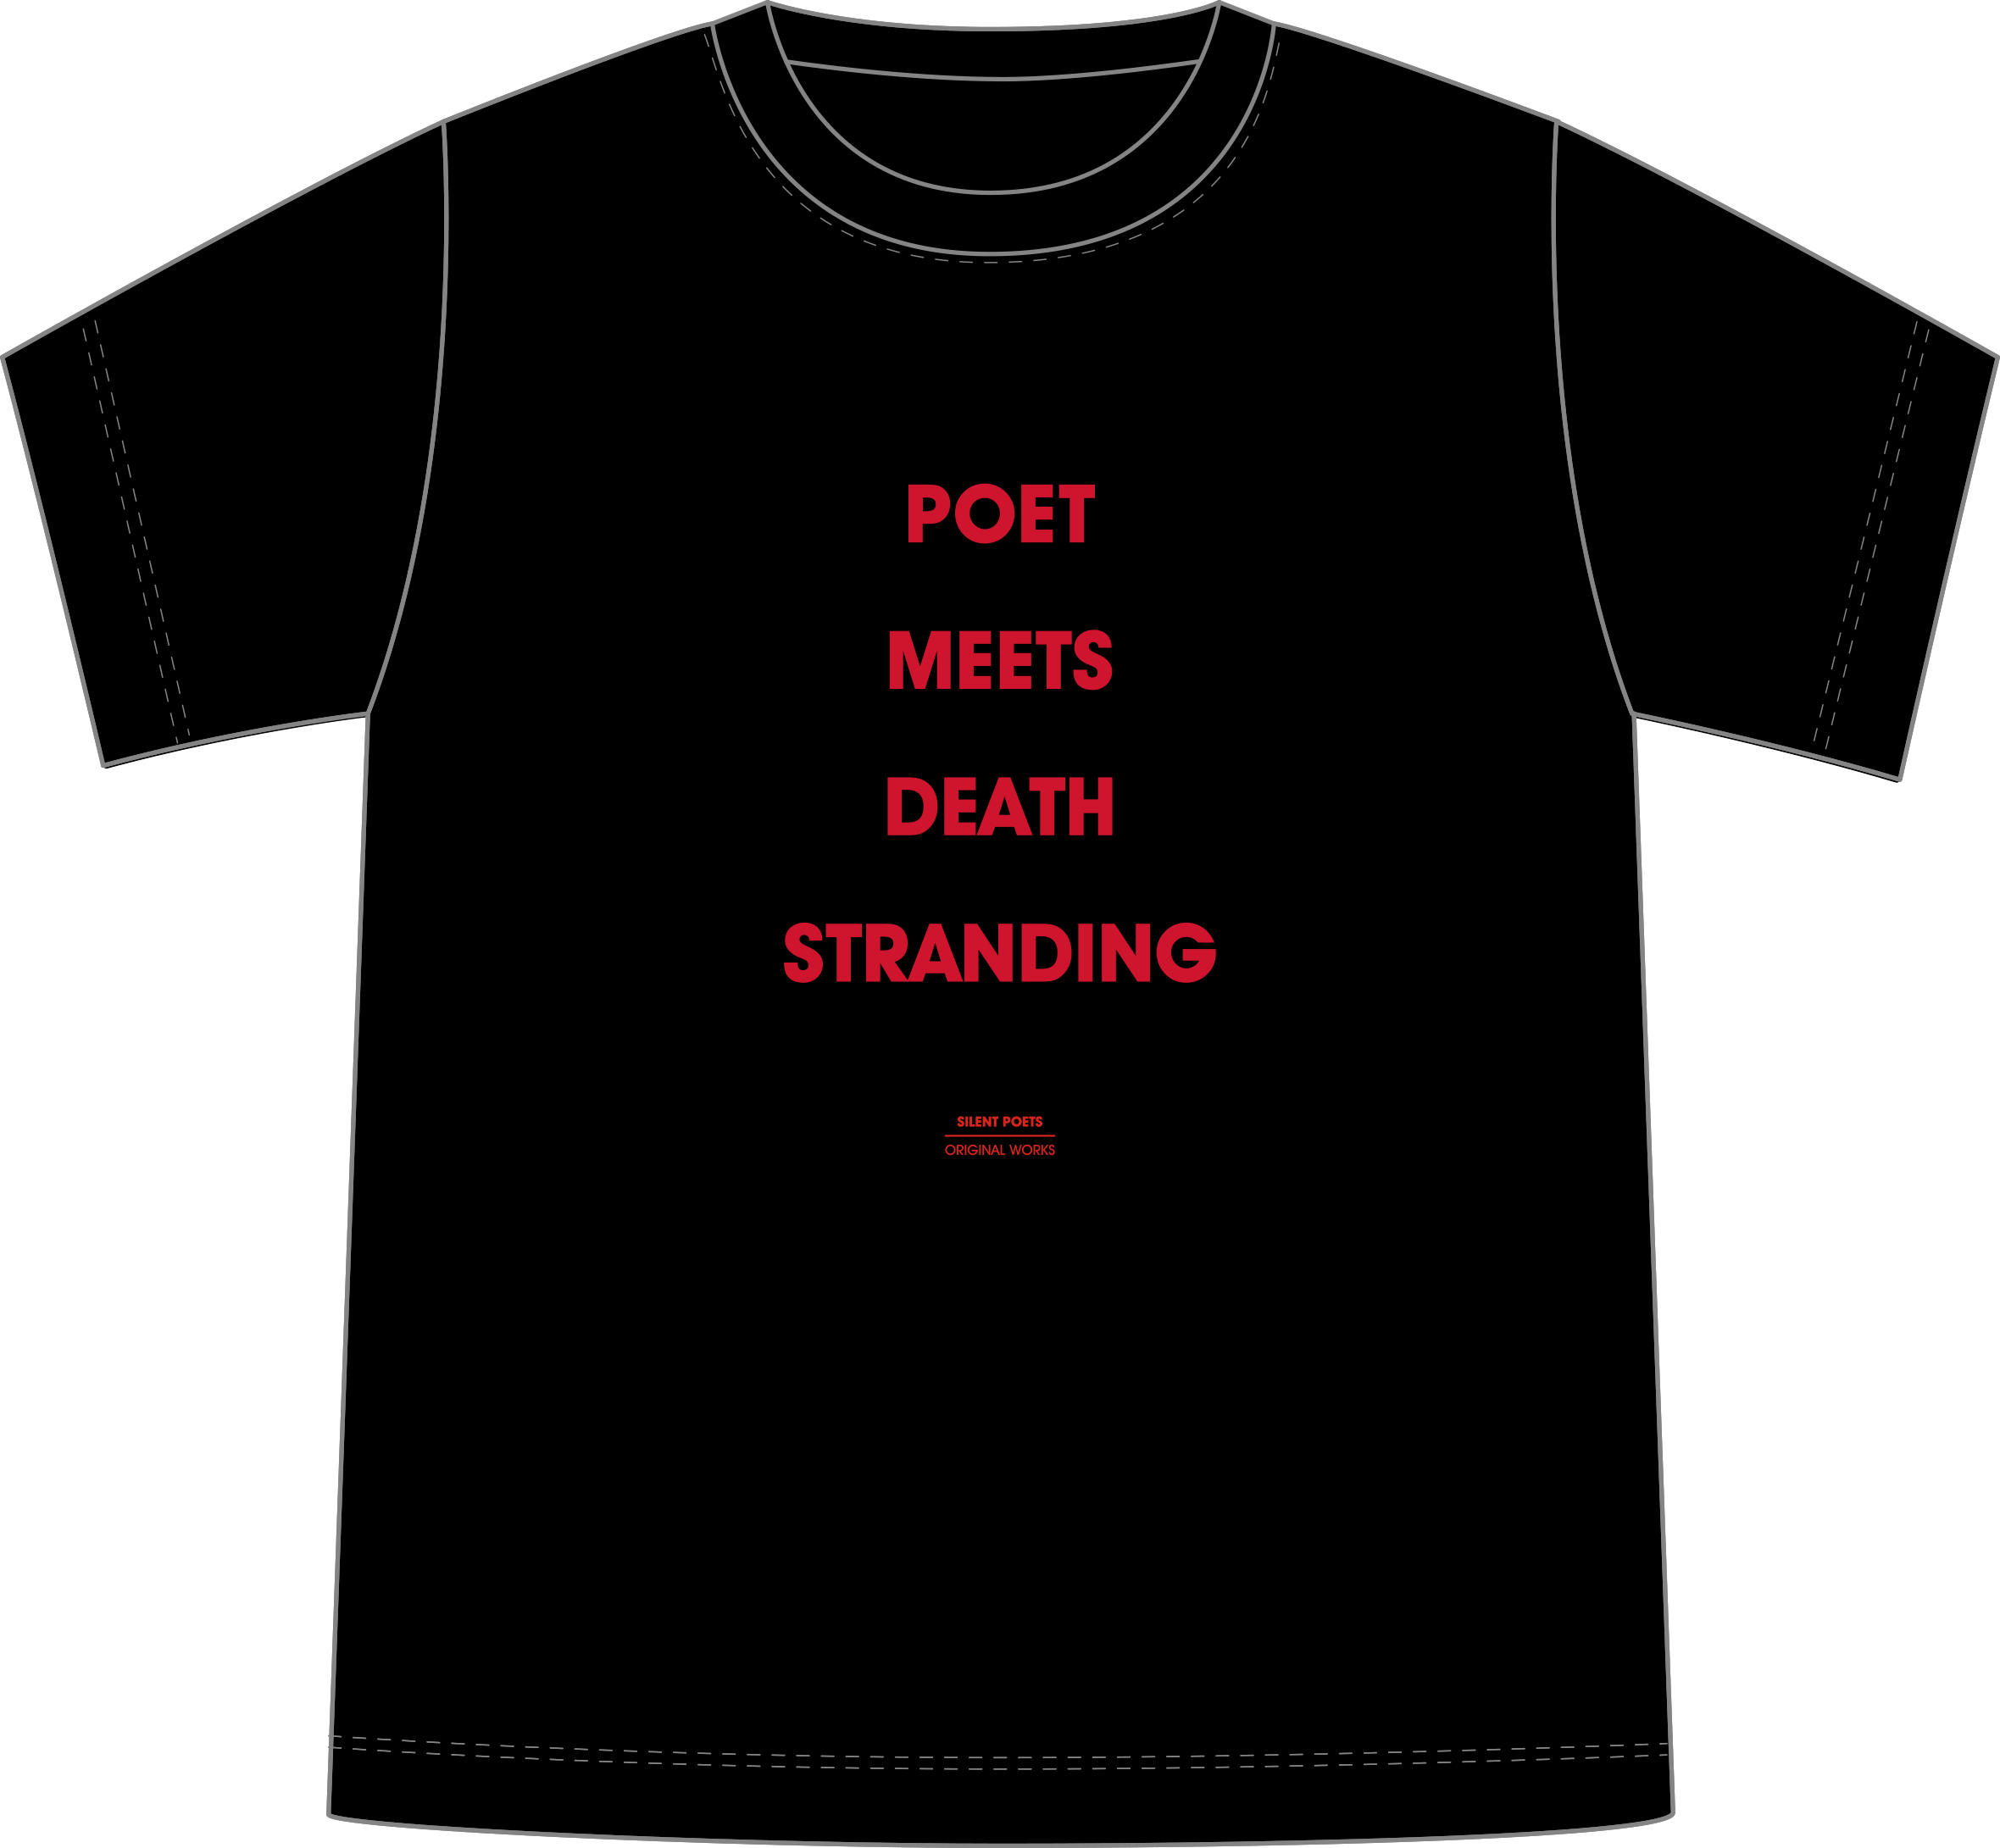 Death Stranding T-Shirt